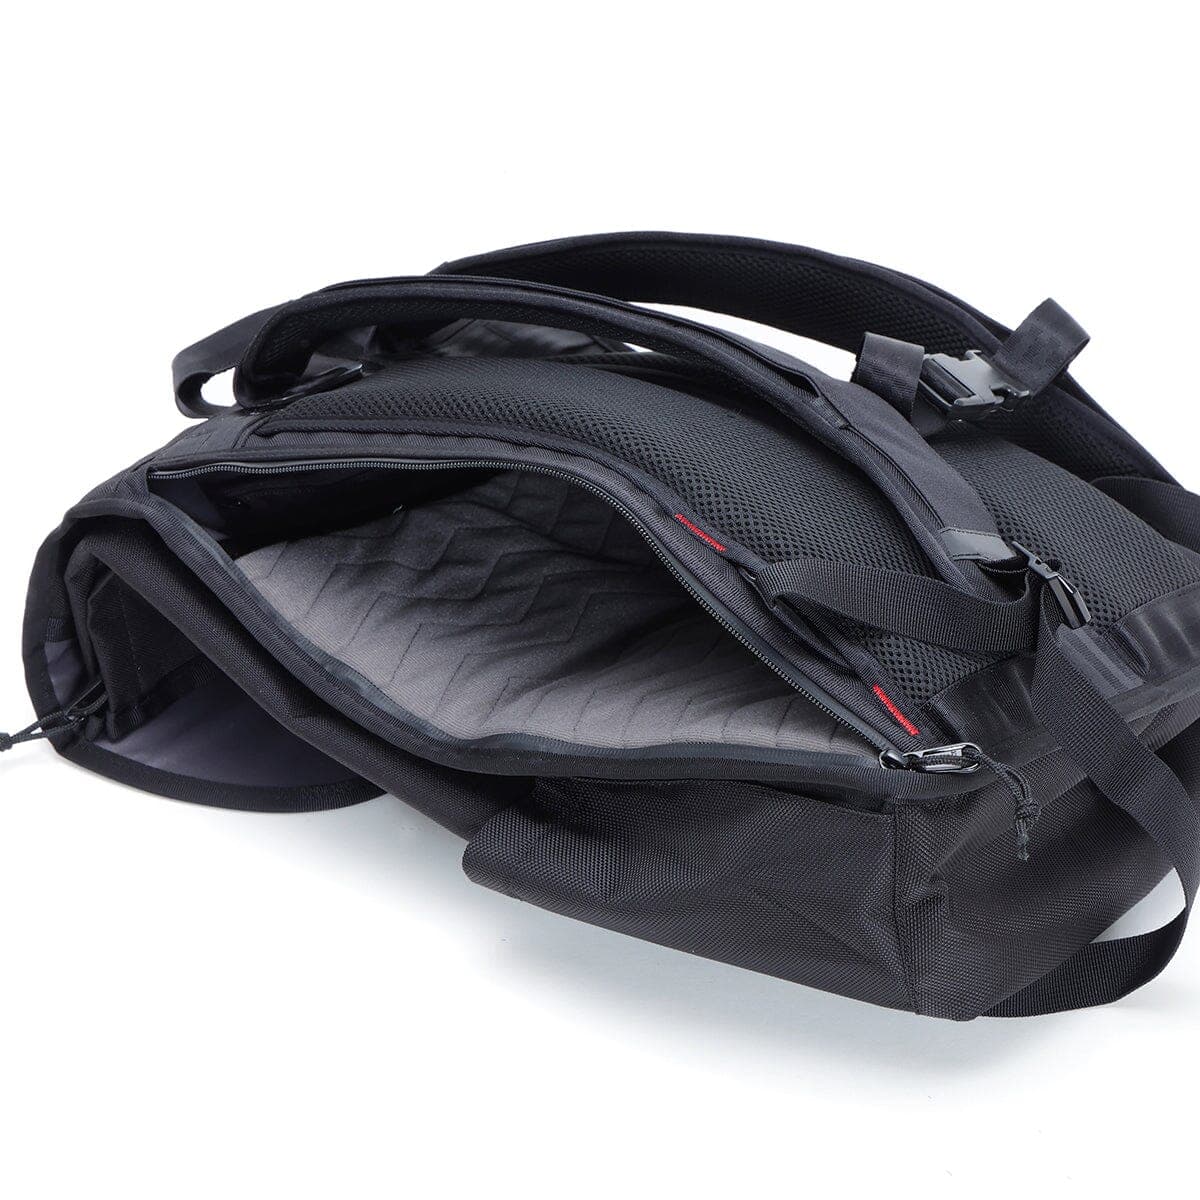 Corbet backpack 24L padded laptop sleeve